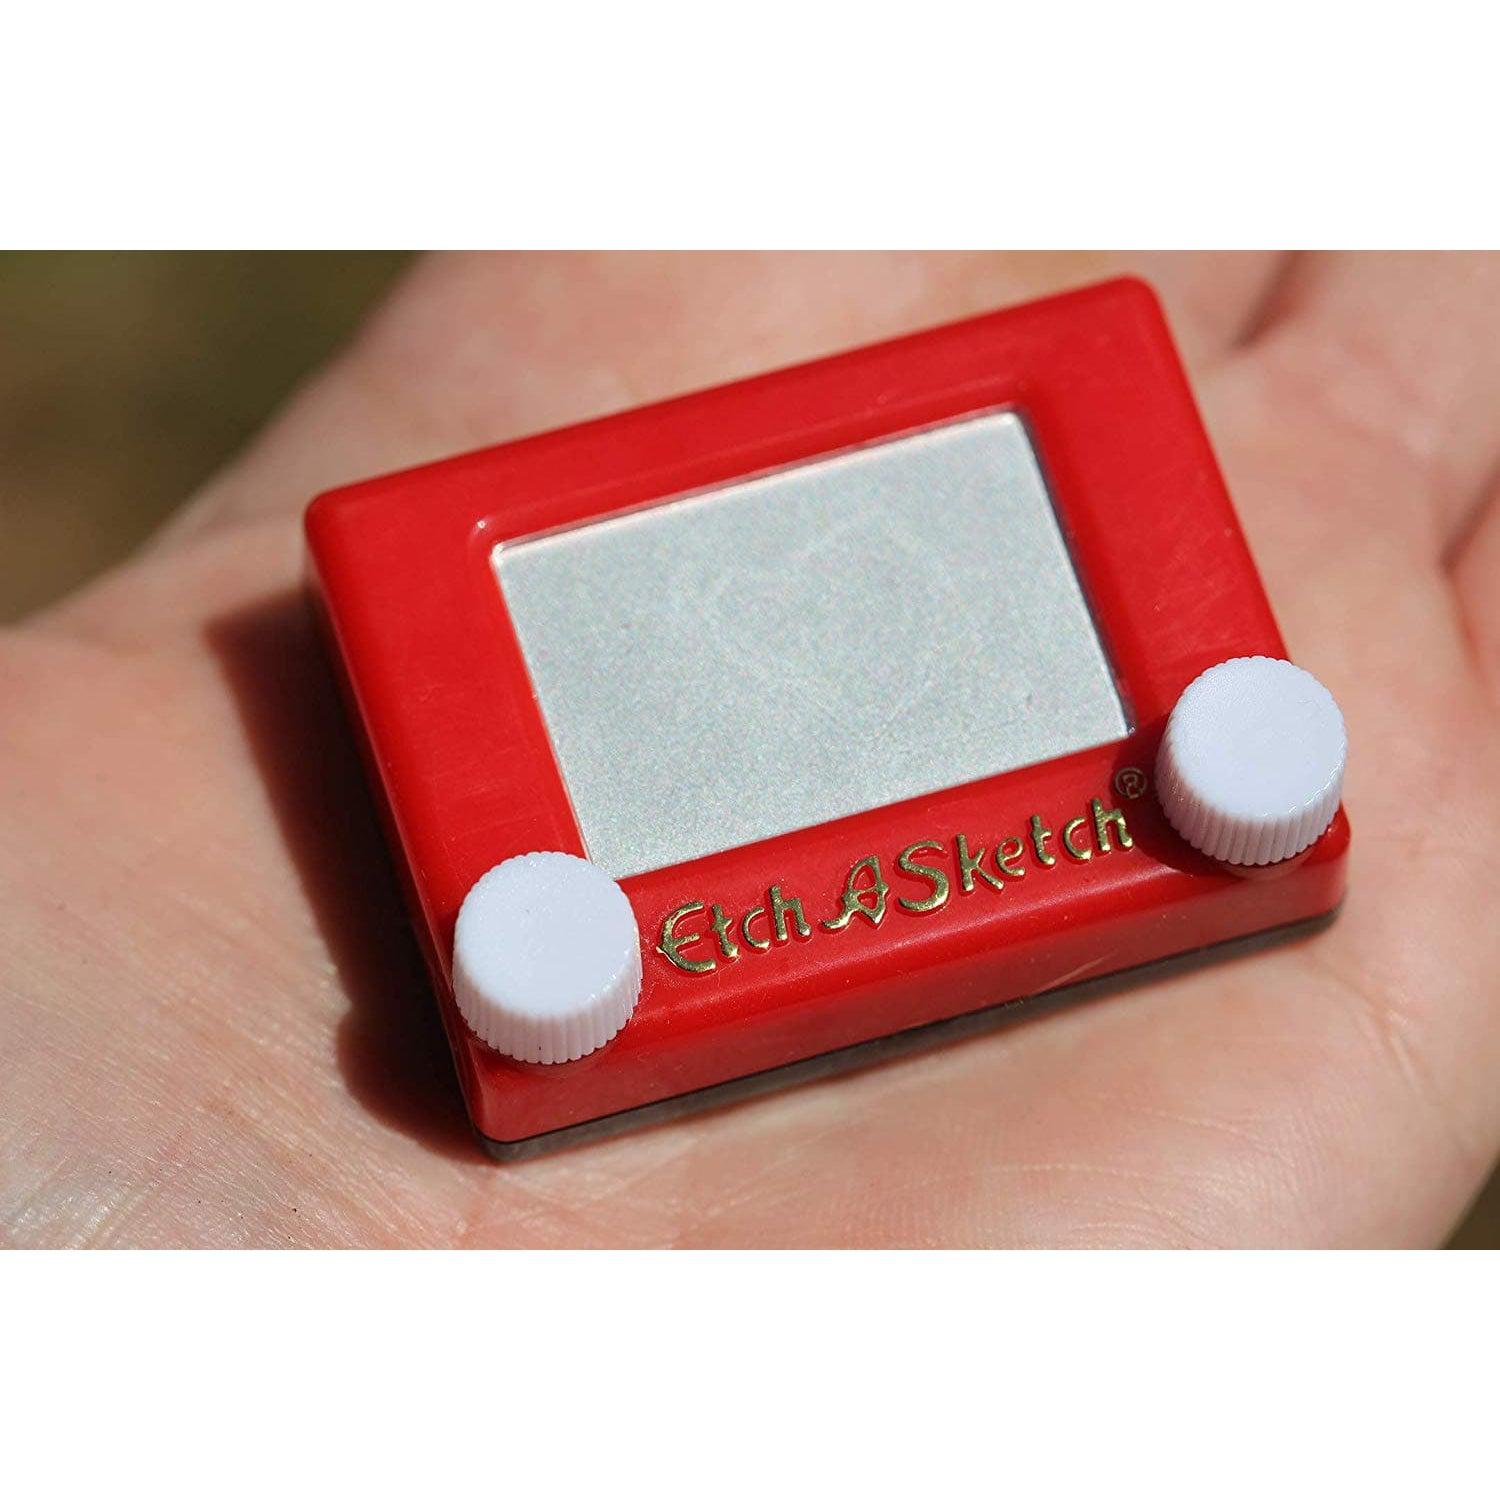 Super Impulse-World's Smallest Etch a Sketch-504-Legacy Toys